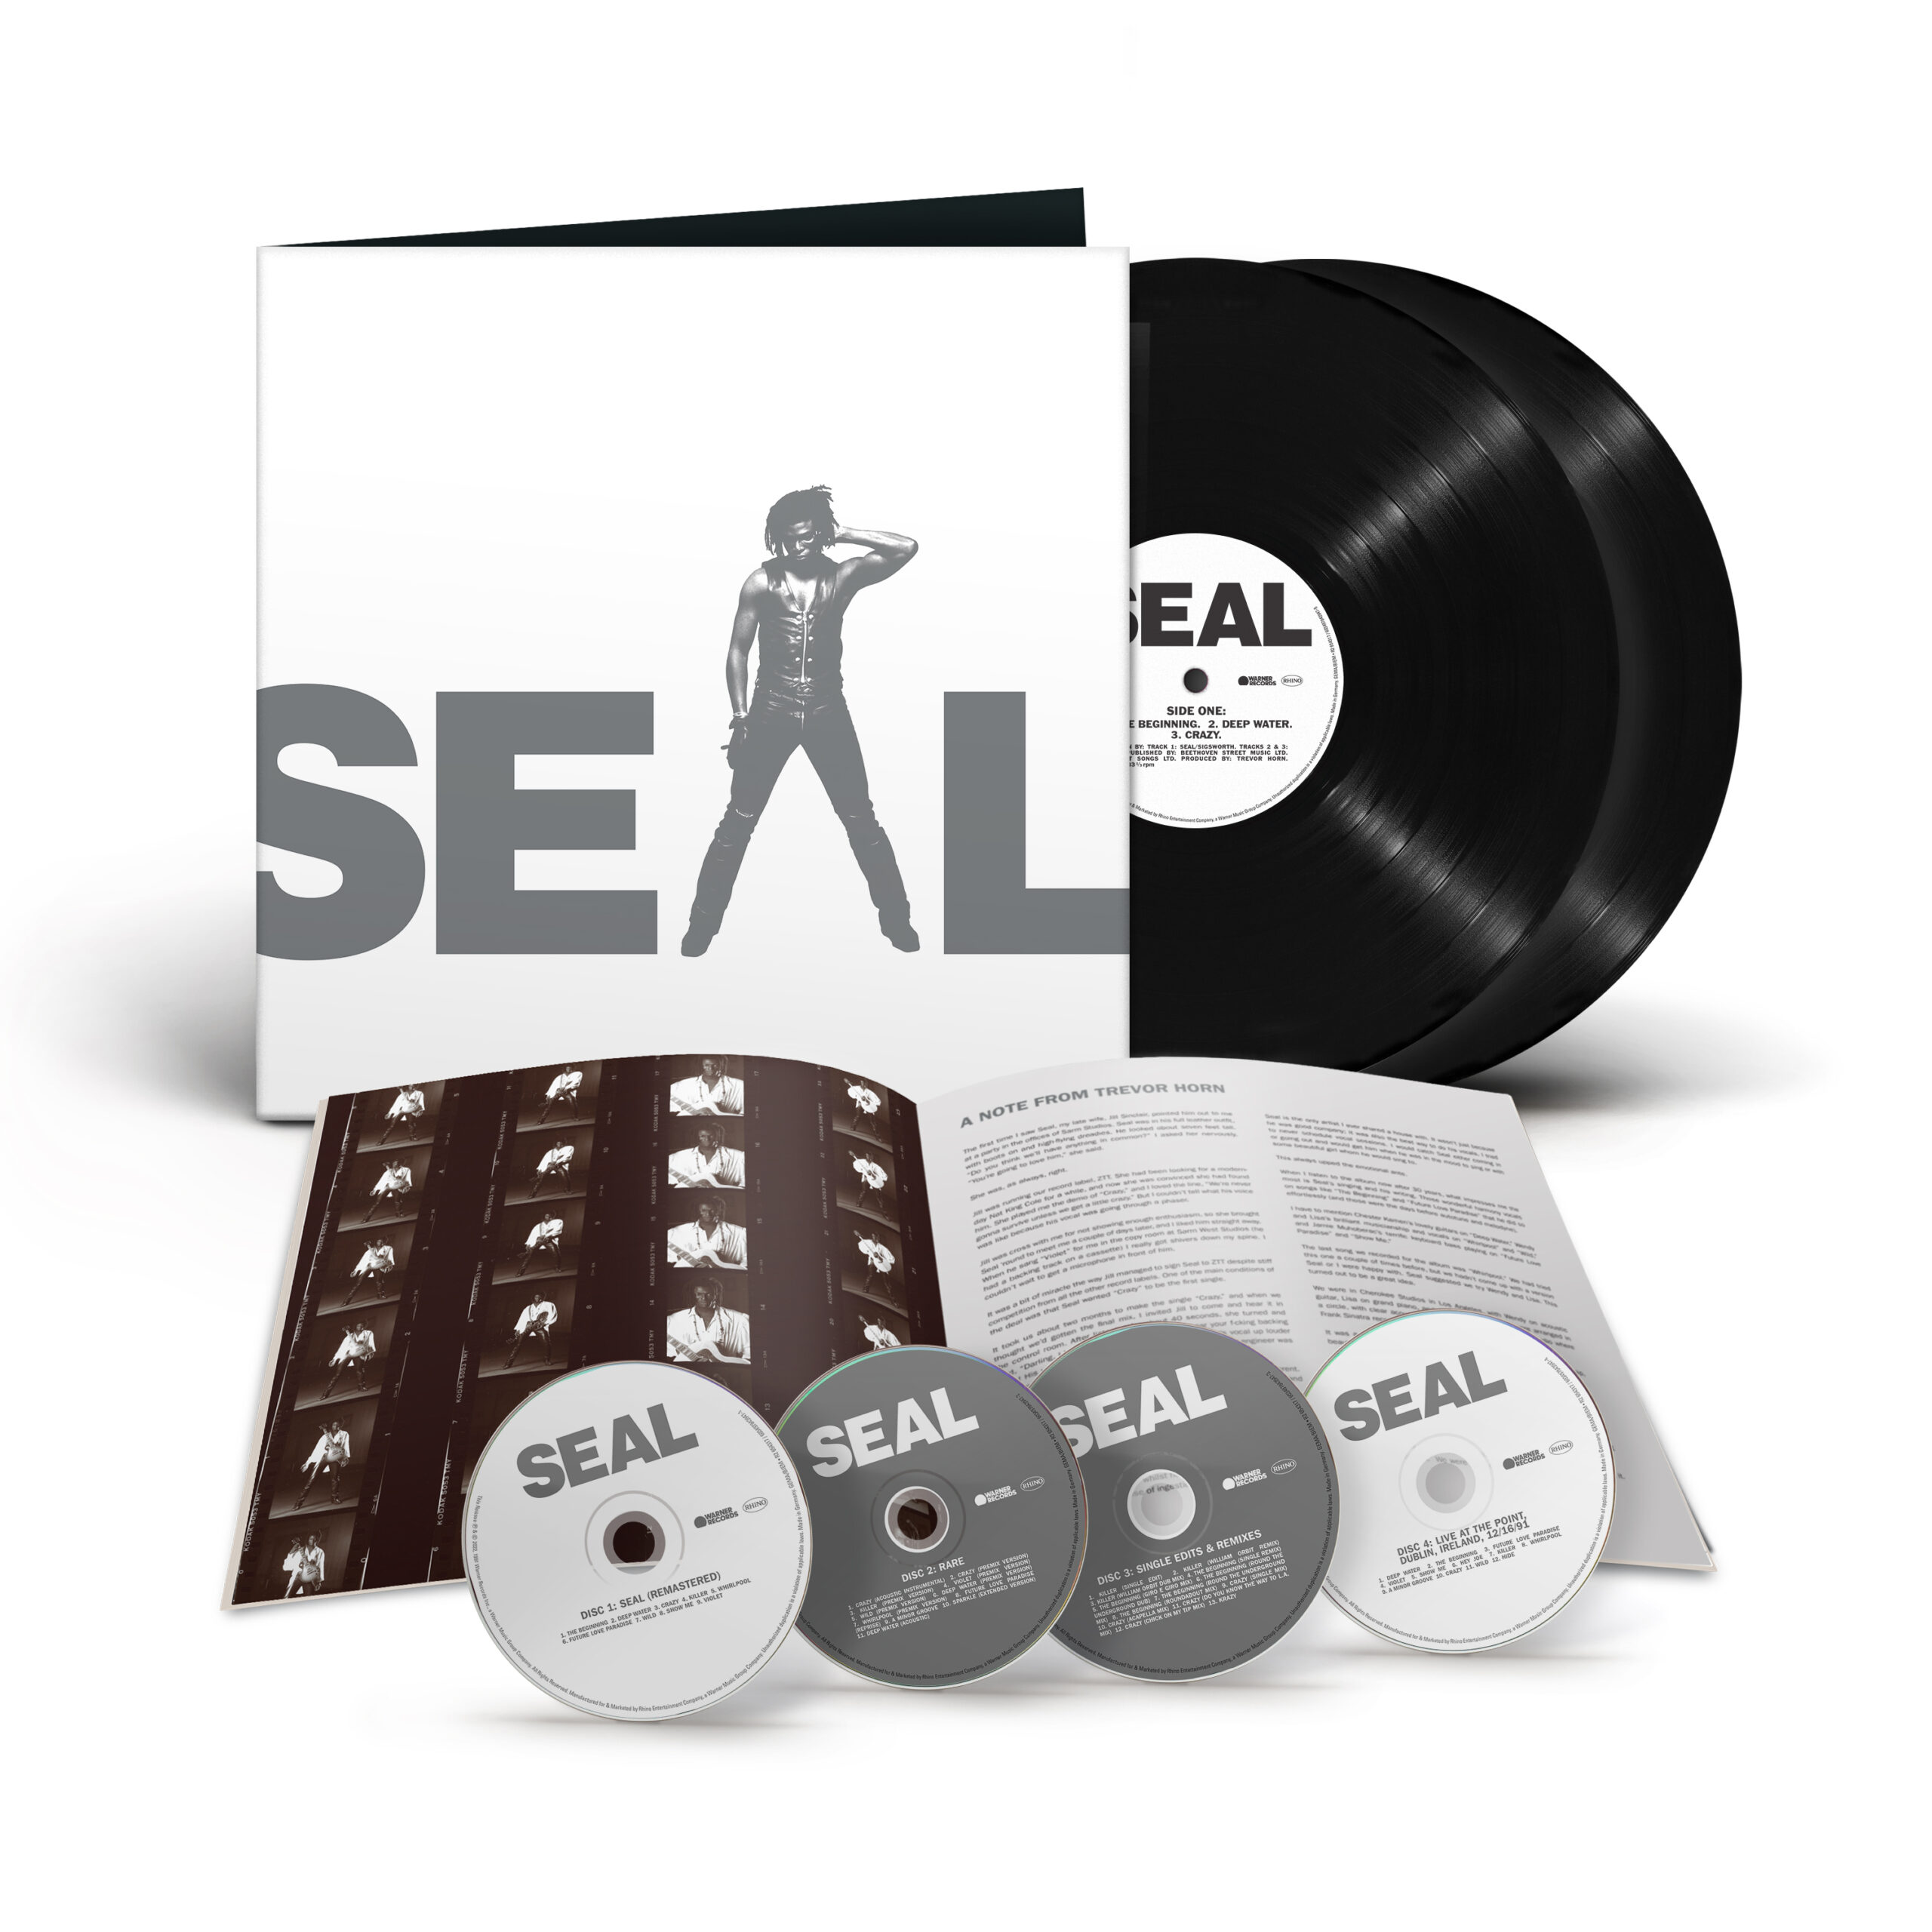 Seal's debut album reissued – SuperDeluxeEdition